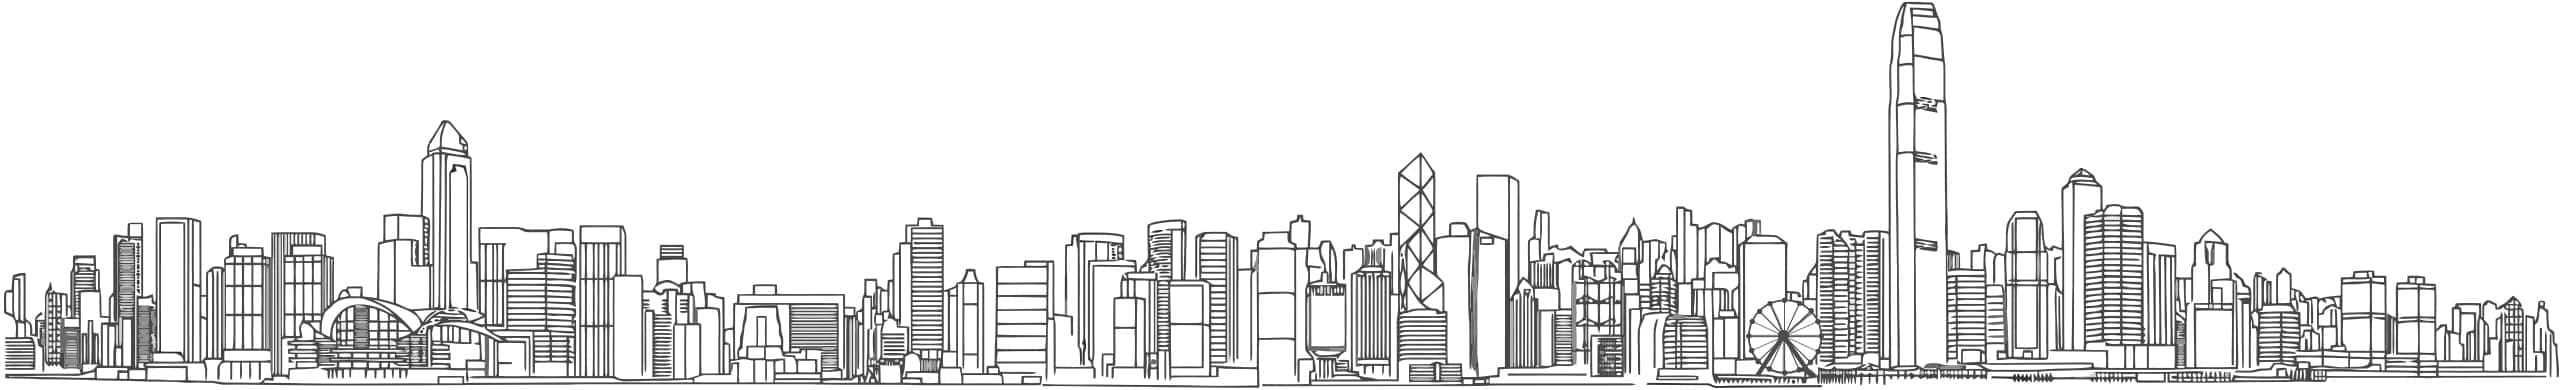 Homepage Archives - Addison Wan Hong Kong Web Design